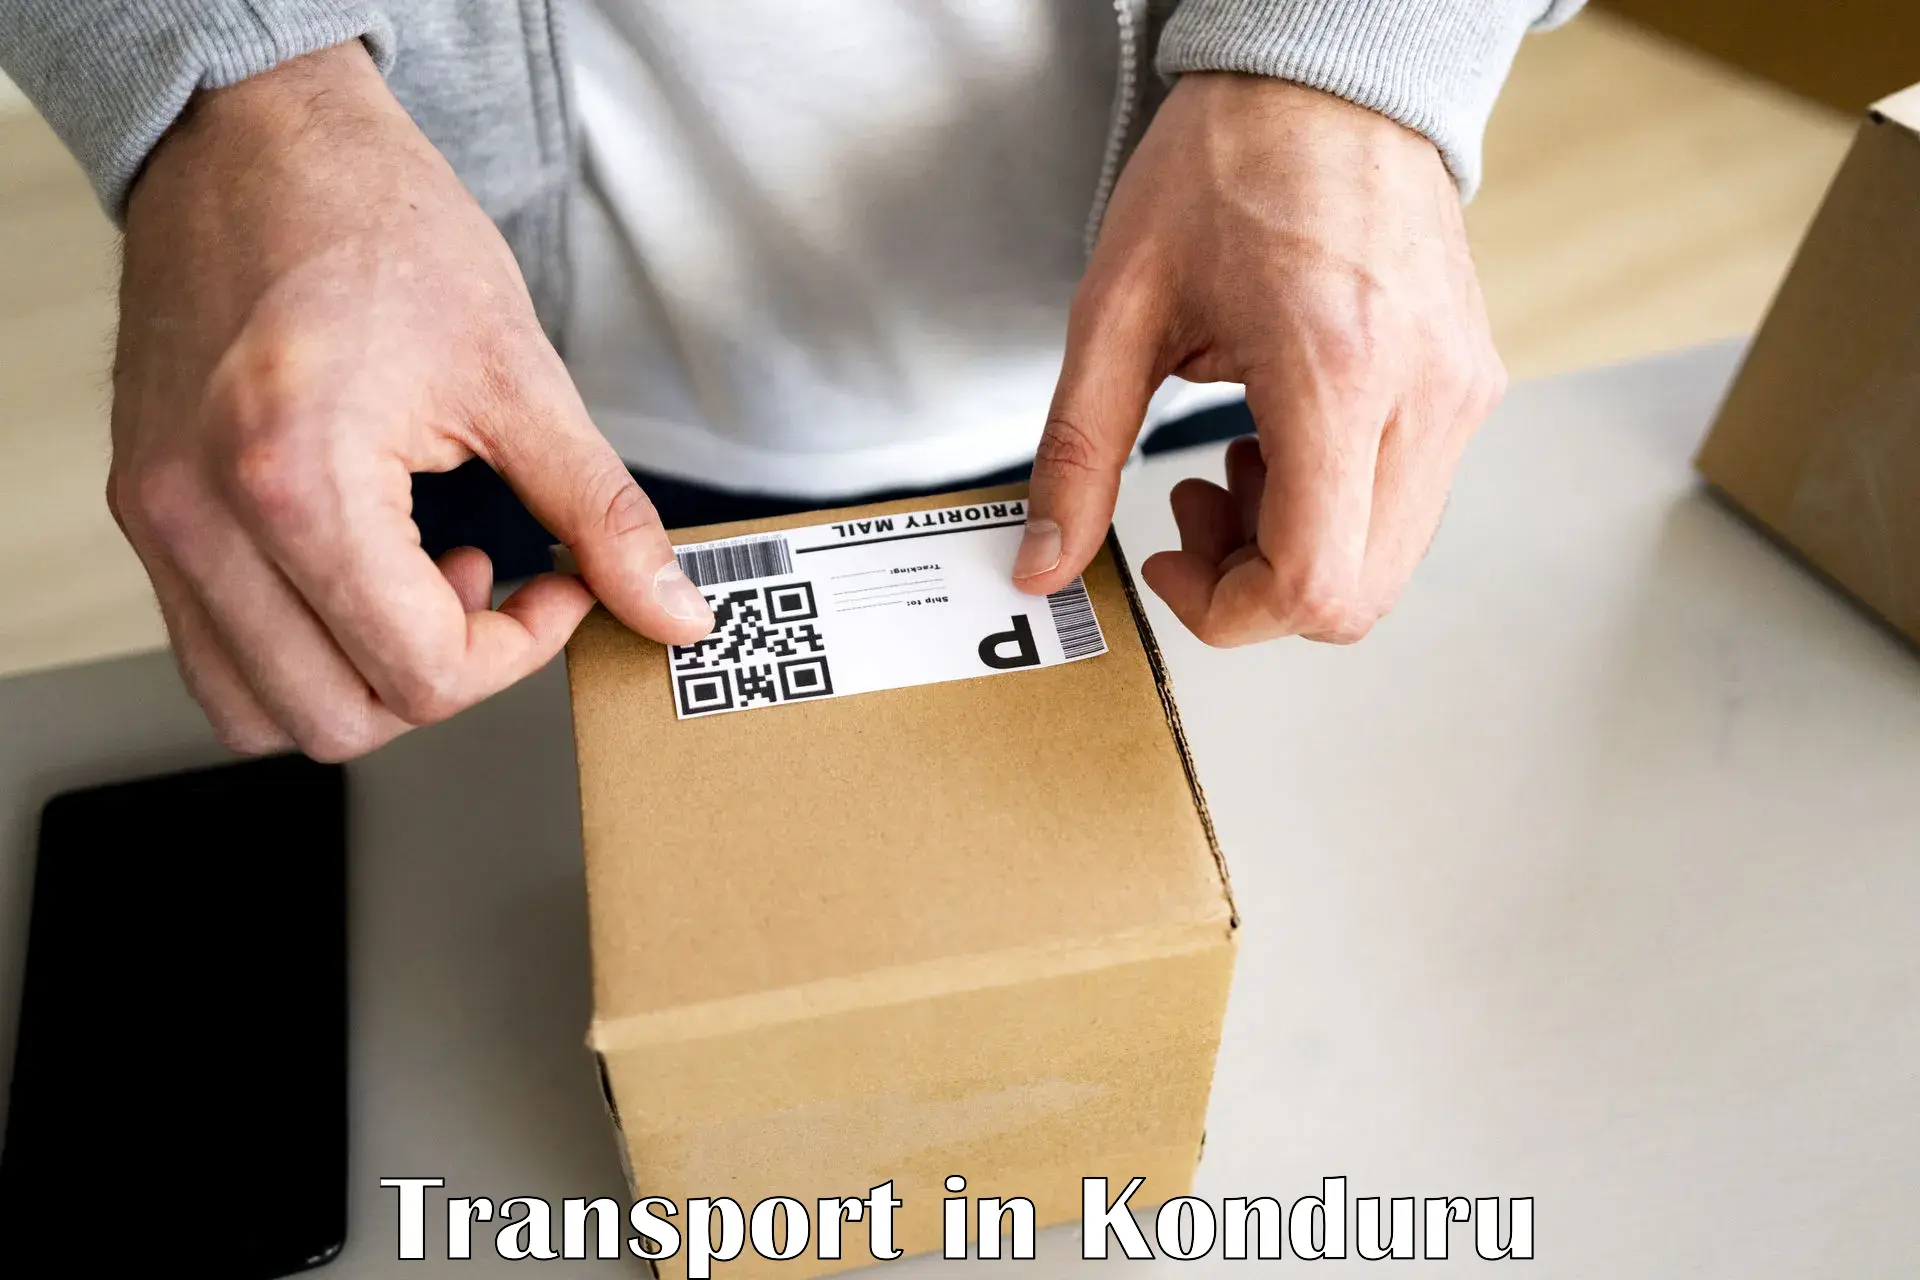 Parcel transport services in Konduru